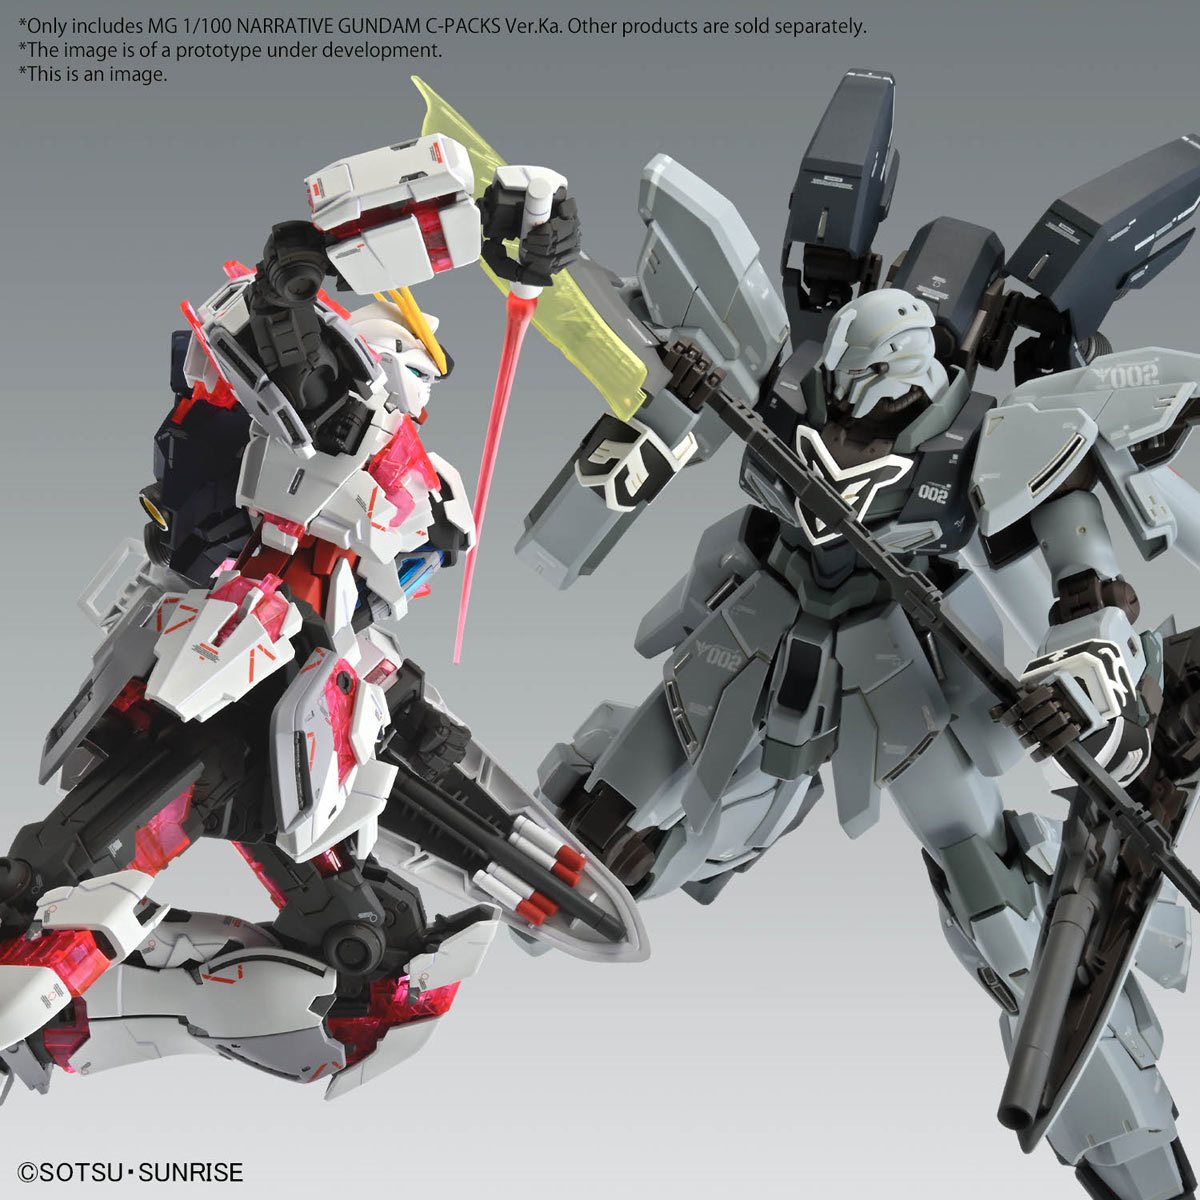 Bandai Hobby Gunpla Master Grade Model Kit: Mobile Suit Gundam Narrative - C Packs Ka Escala 1/100 Kit De Plastico